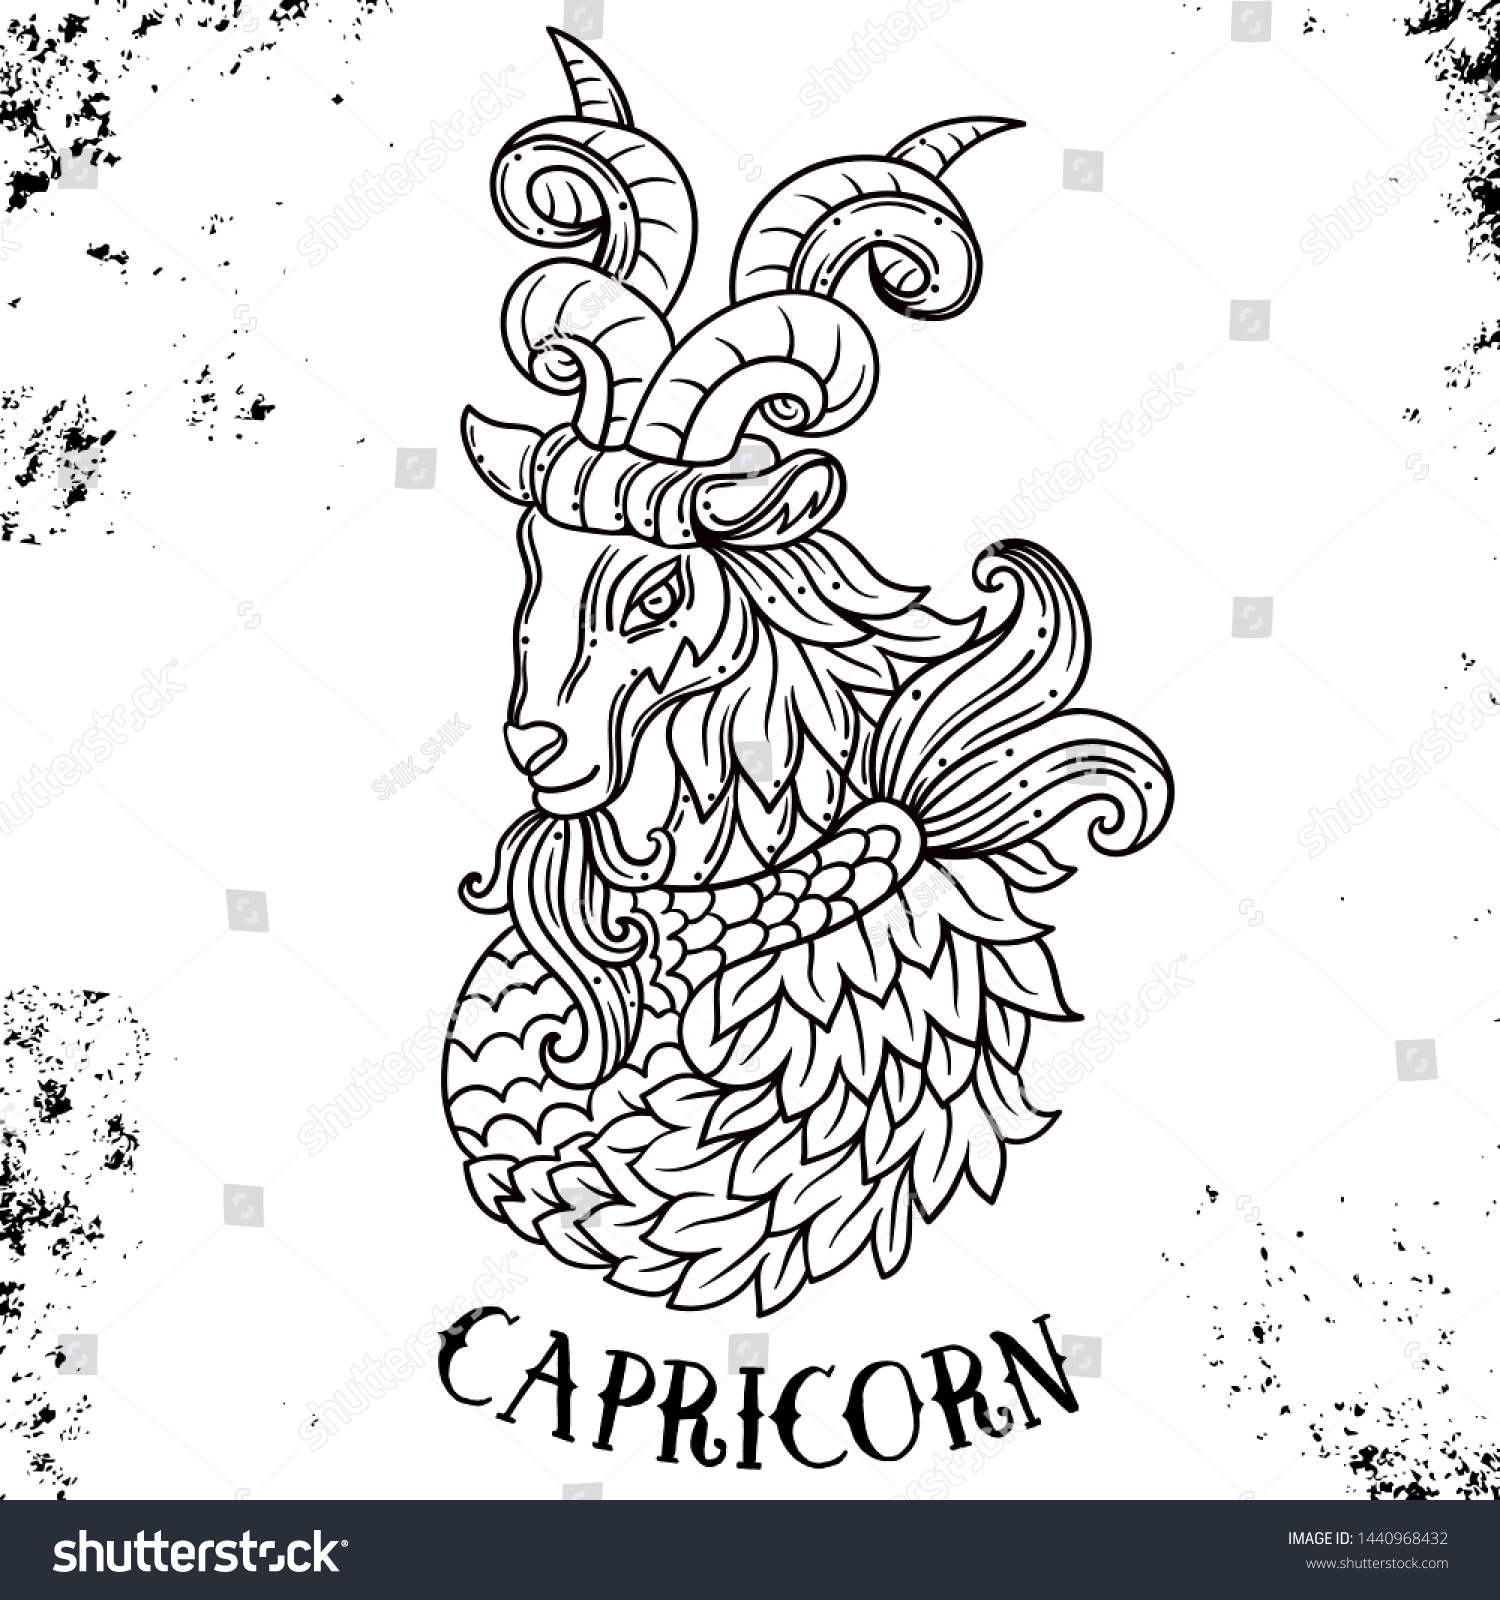 Capricorn drawing Stock Illustrations, Images & Vectors | Shutterstock